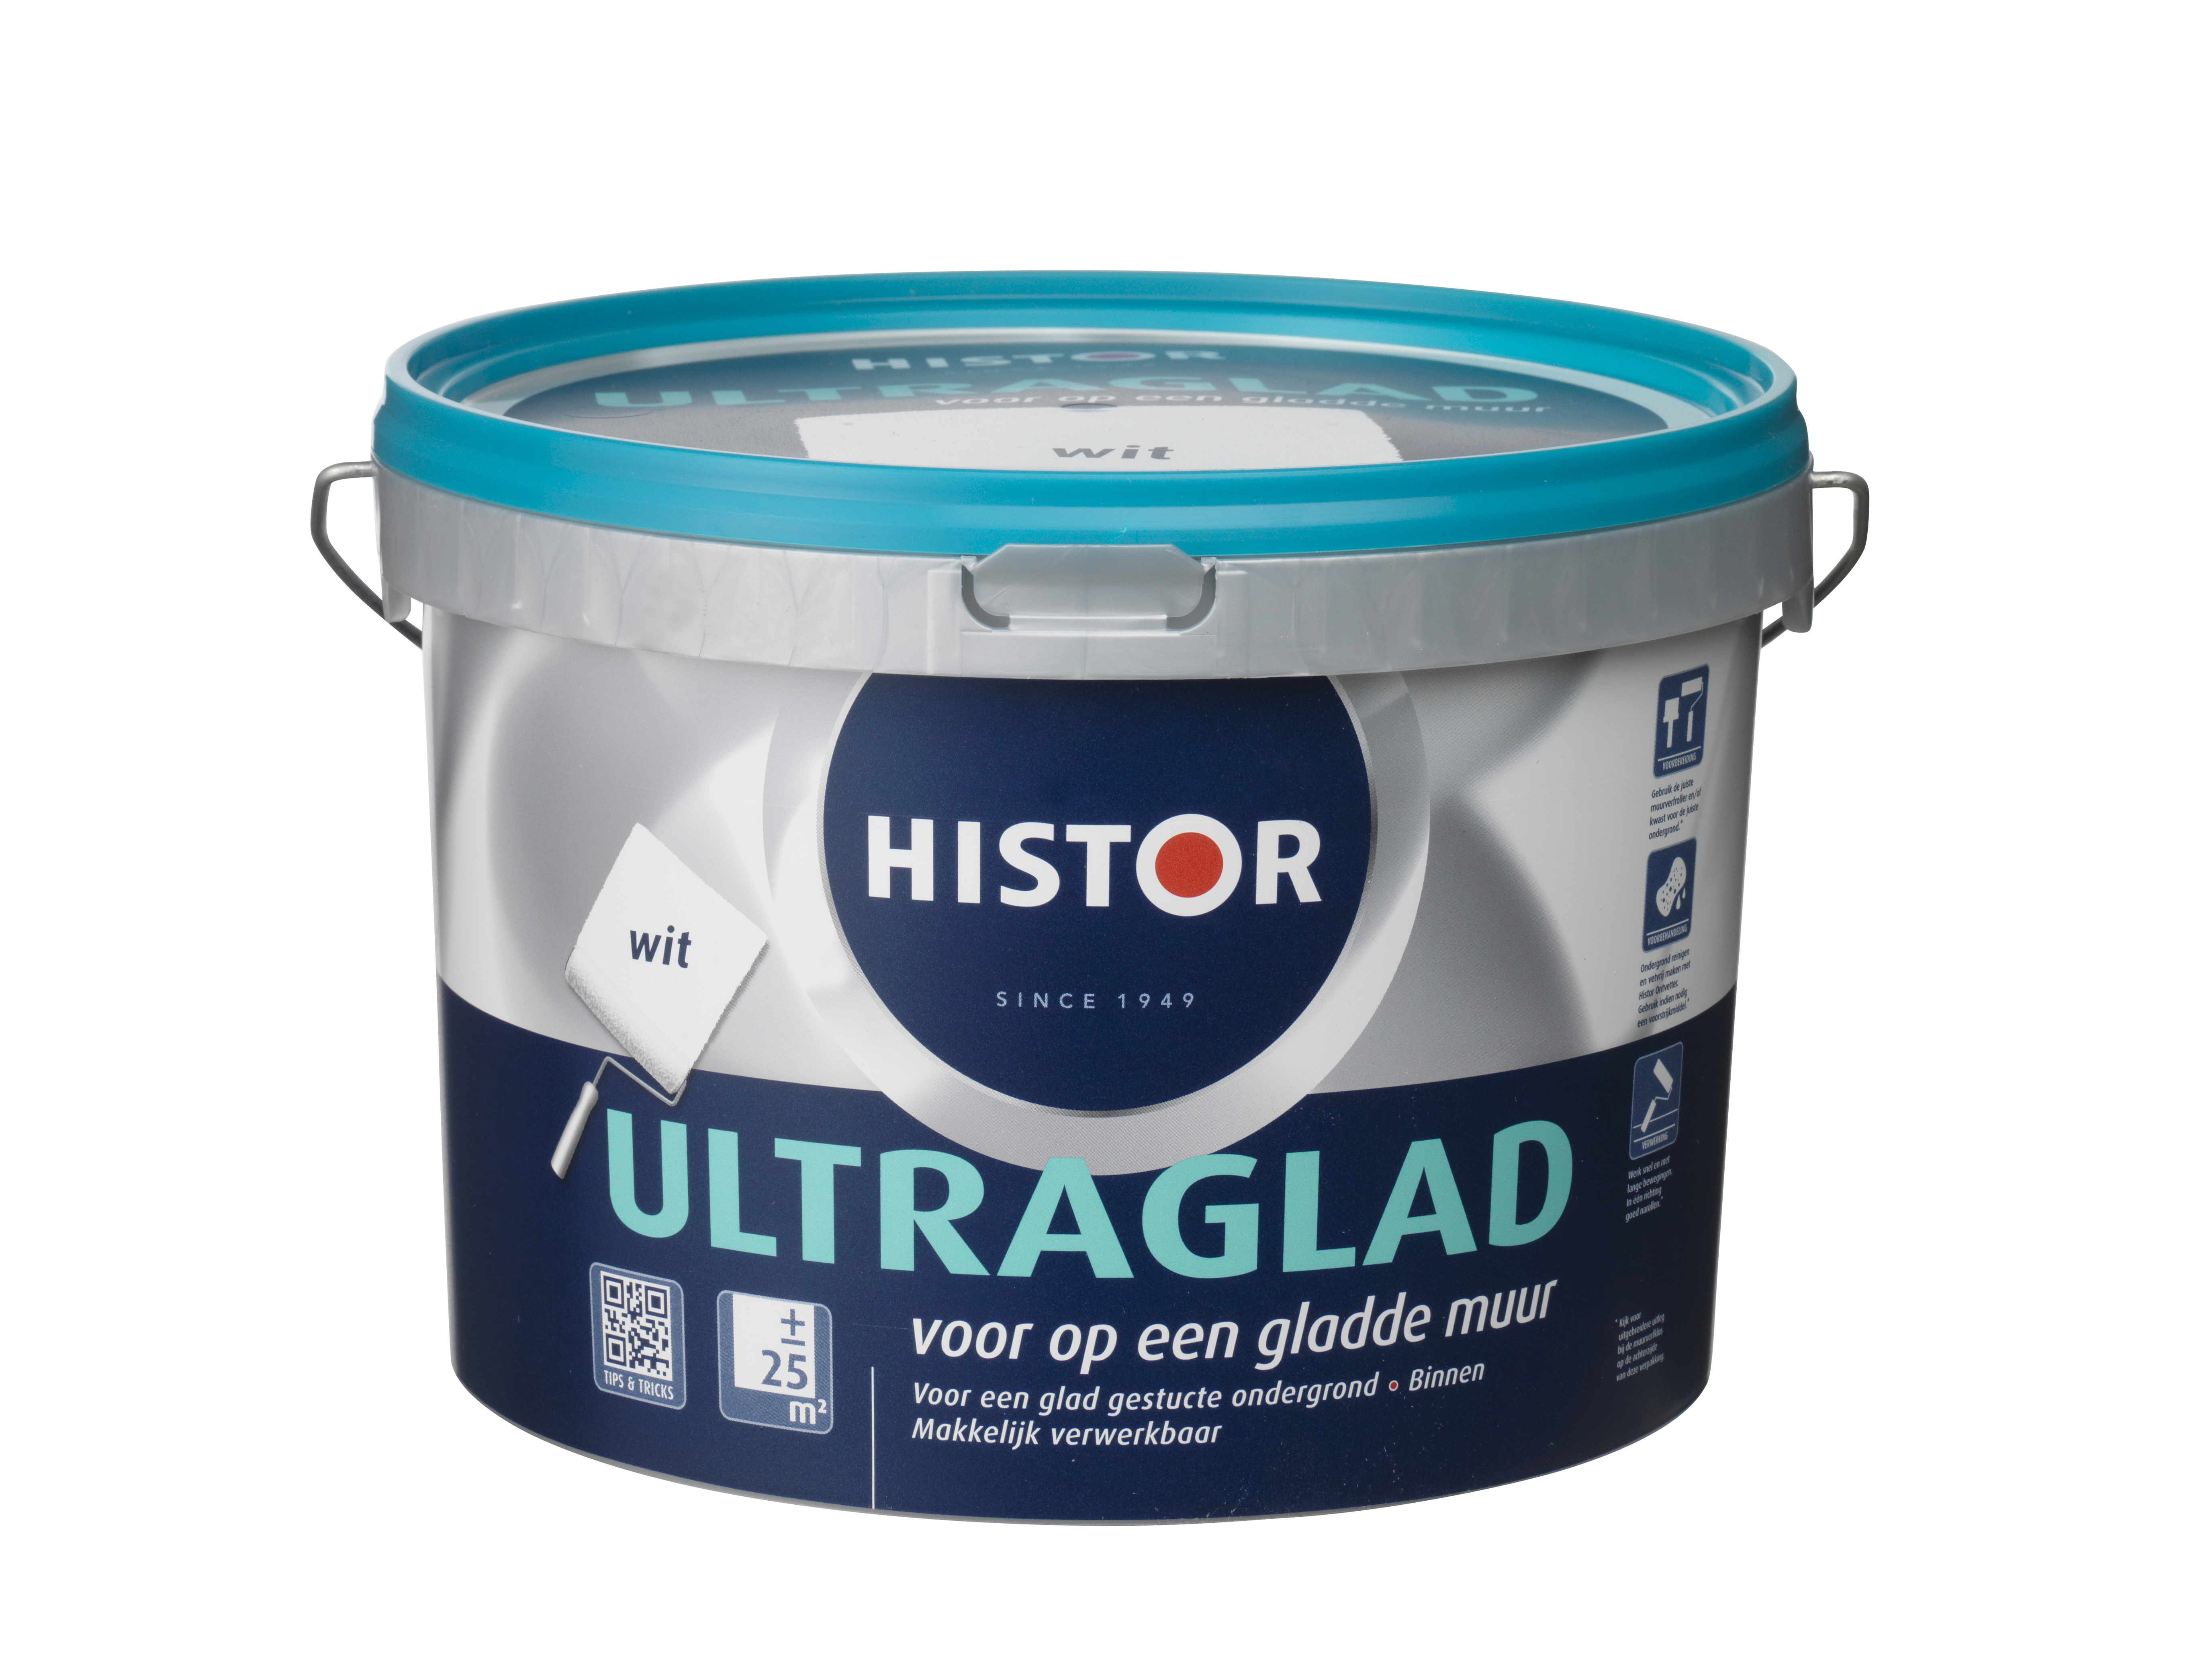 Histor Ultraglad Muurverf - 2 5 liter - Wit